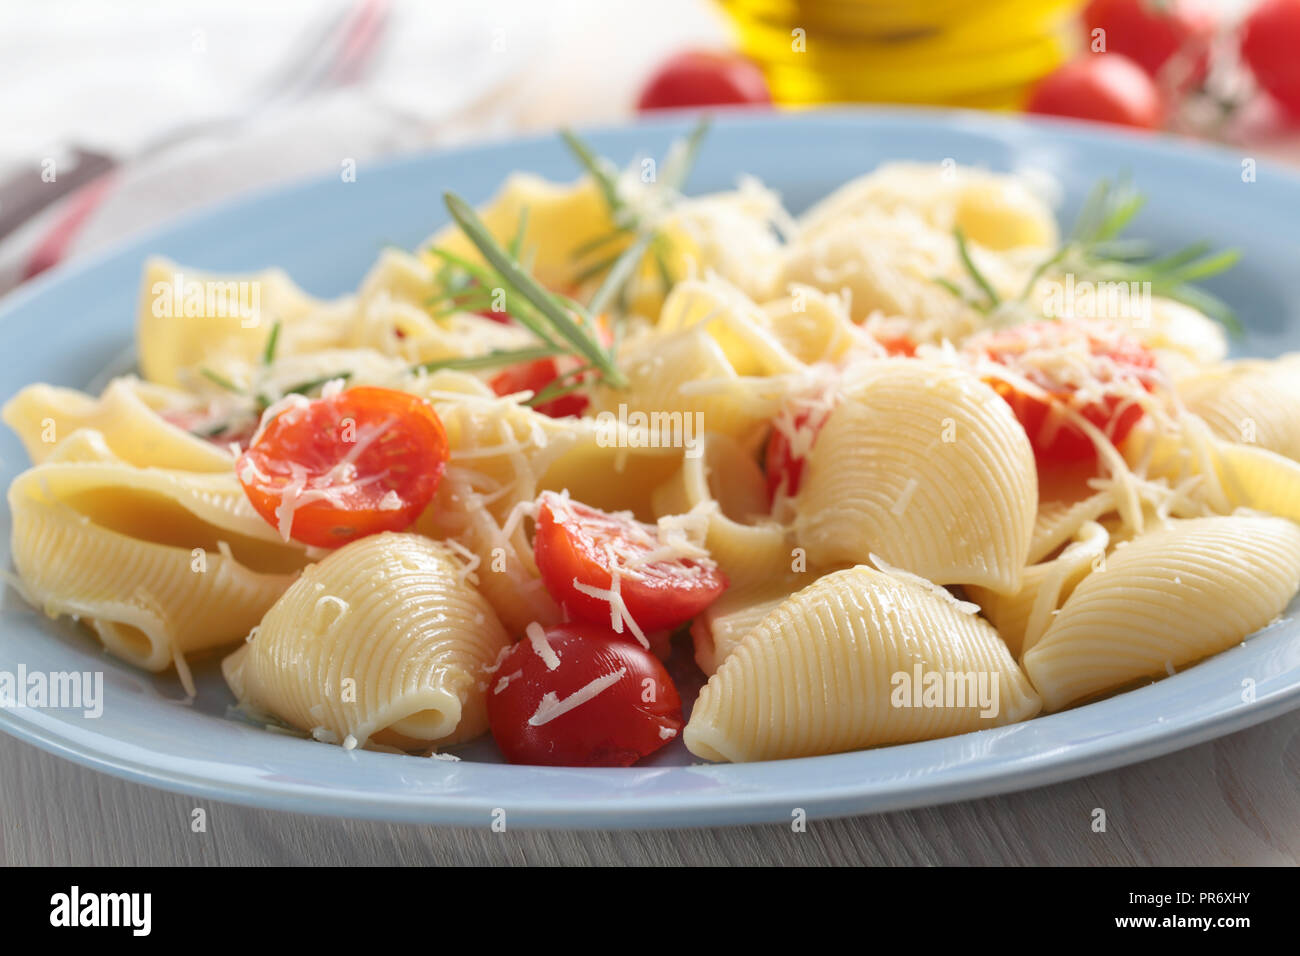 Lumaconi with cherry tomato, parmesan cheese, and rosemary Stock Photo